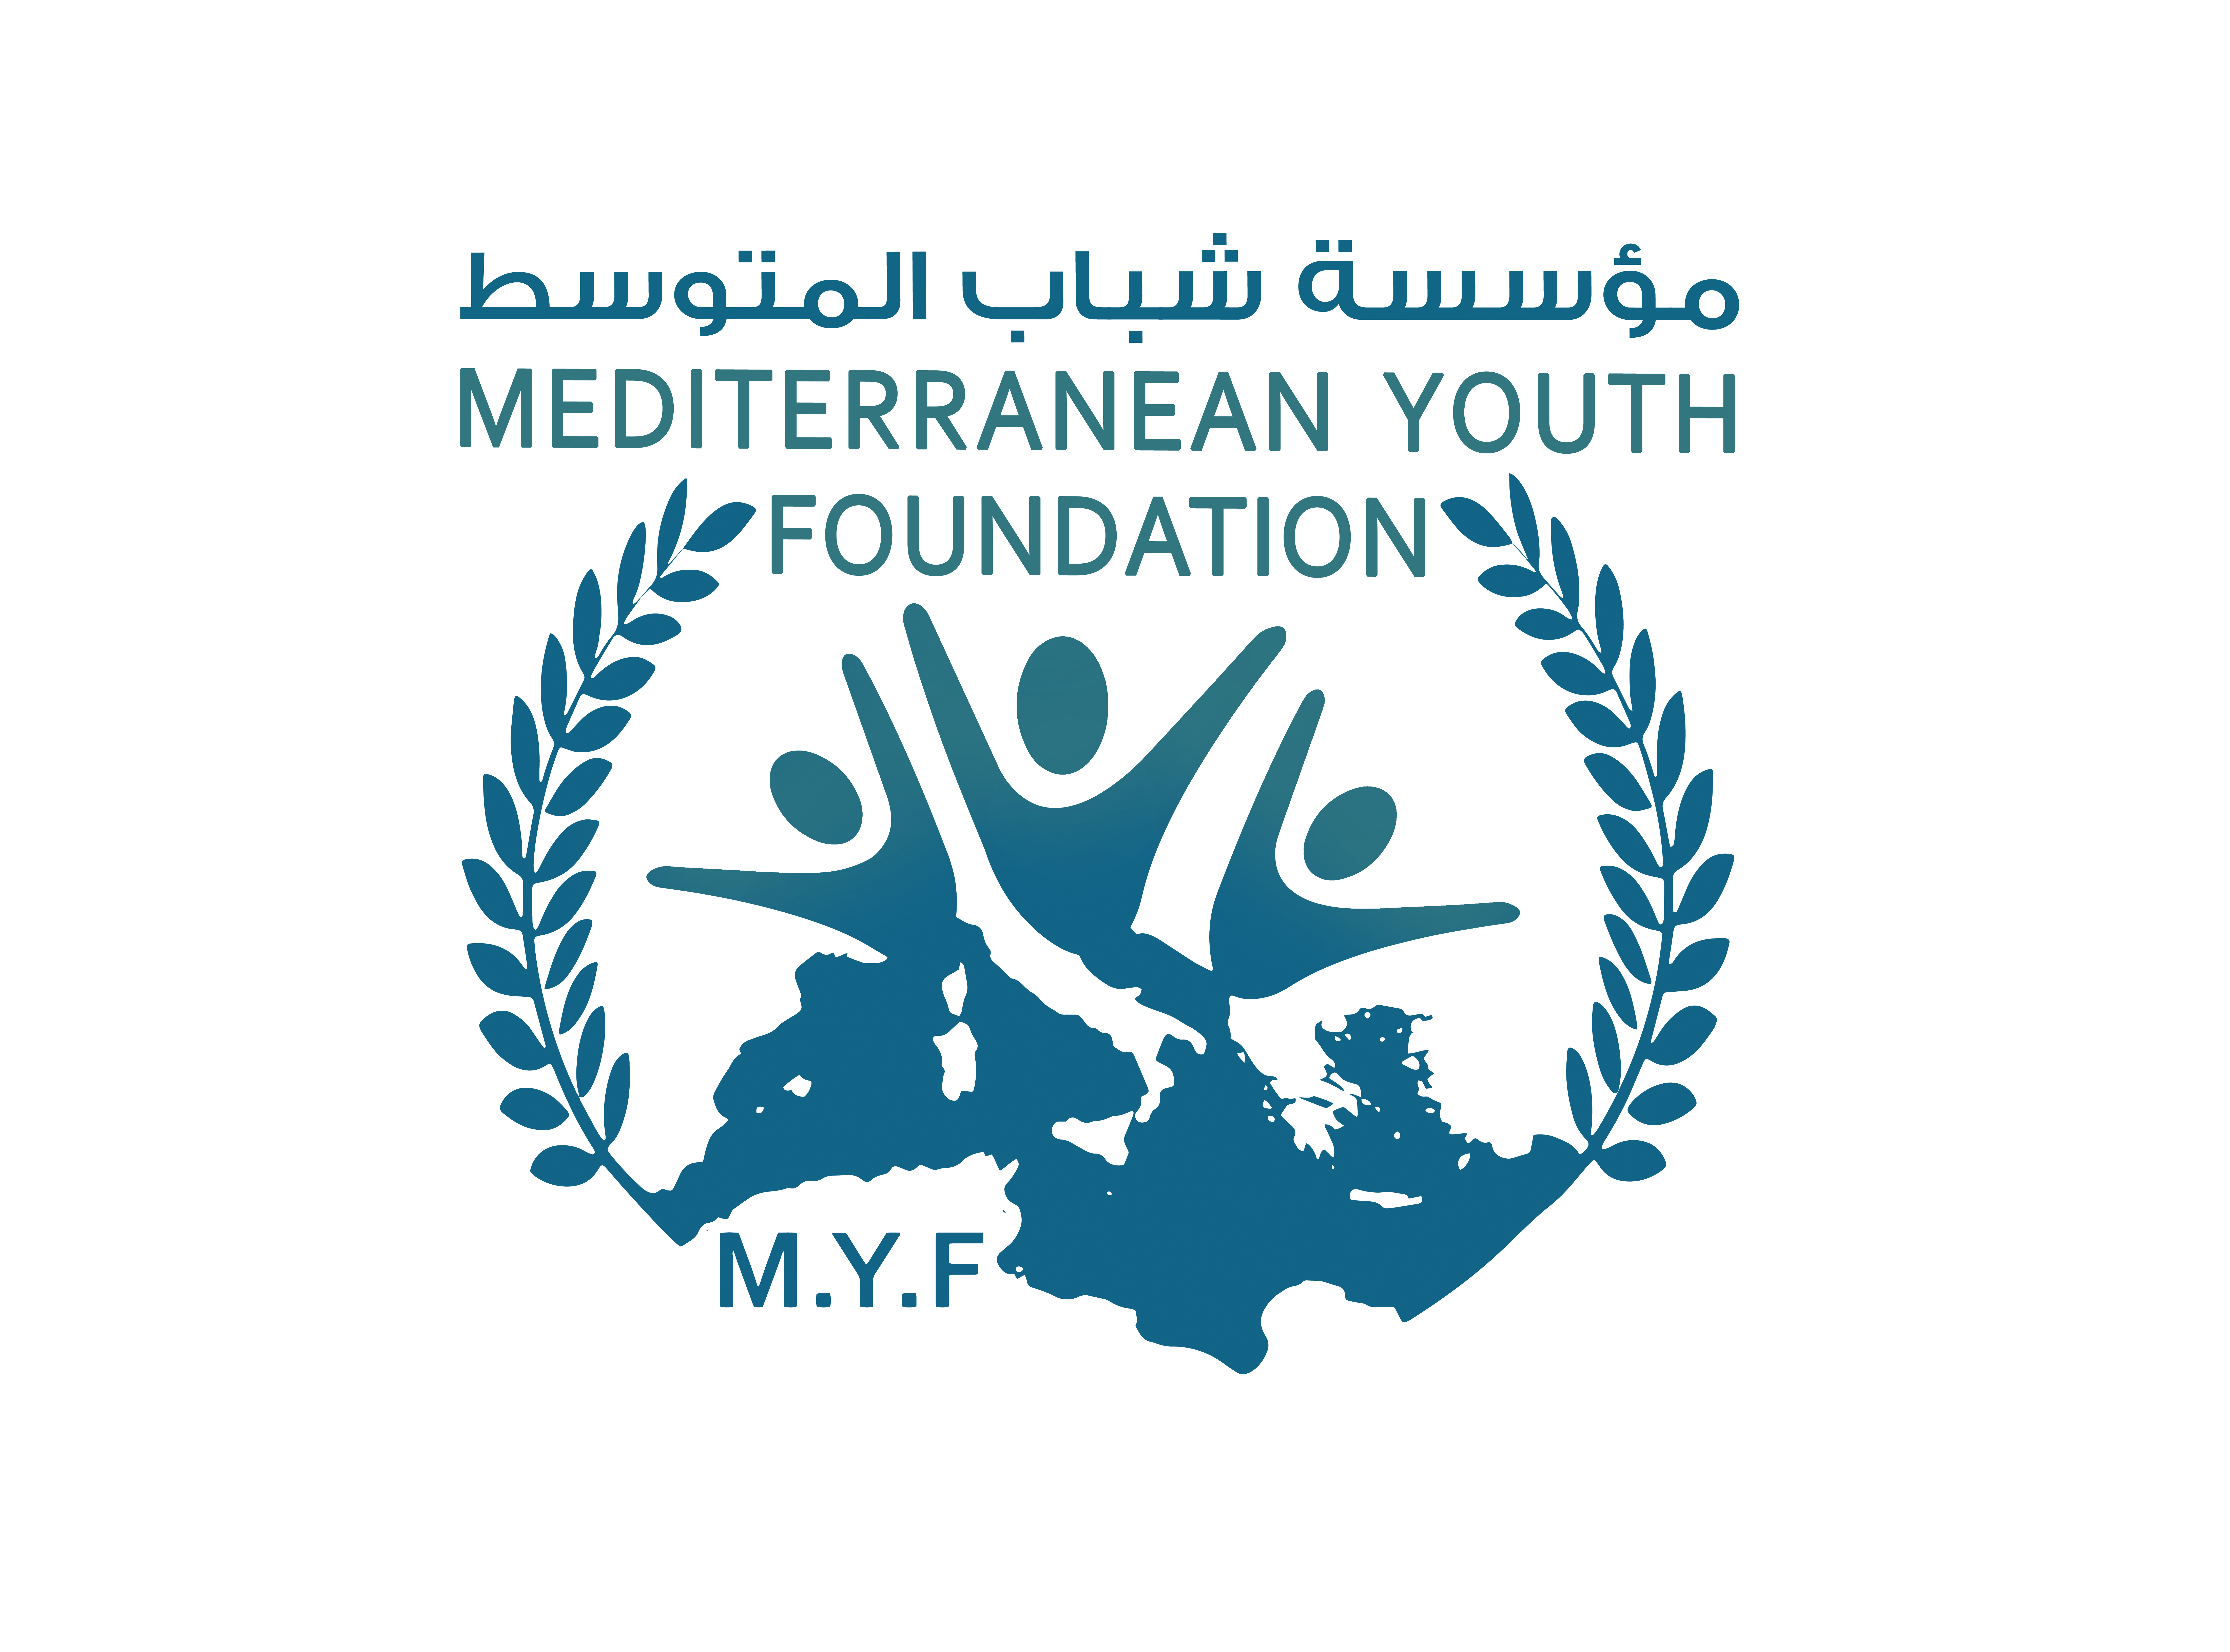 Mediterranean Youth Foundation